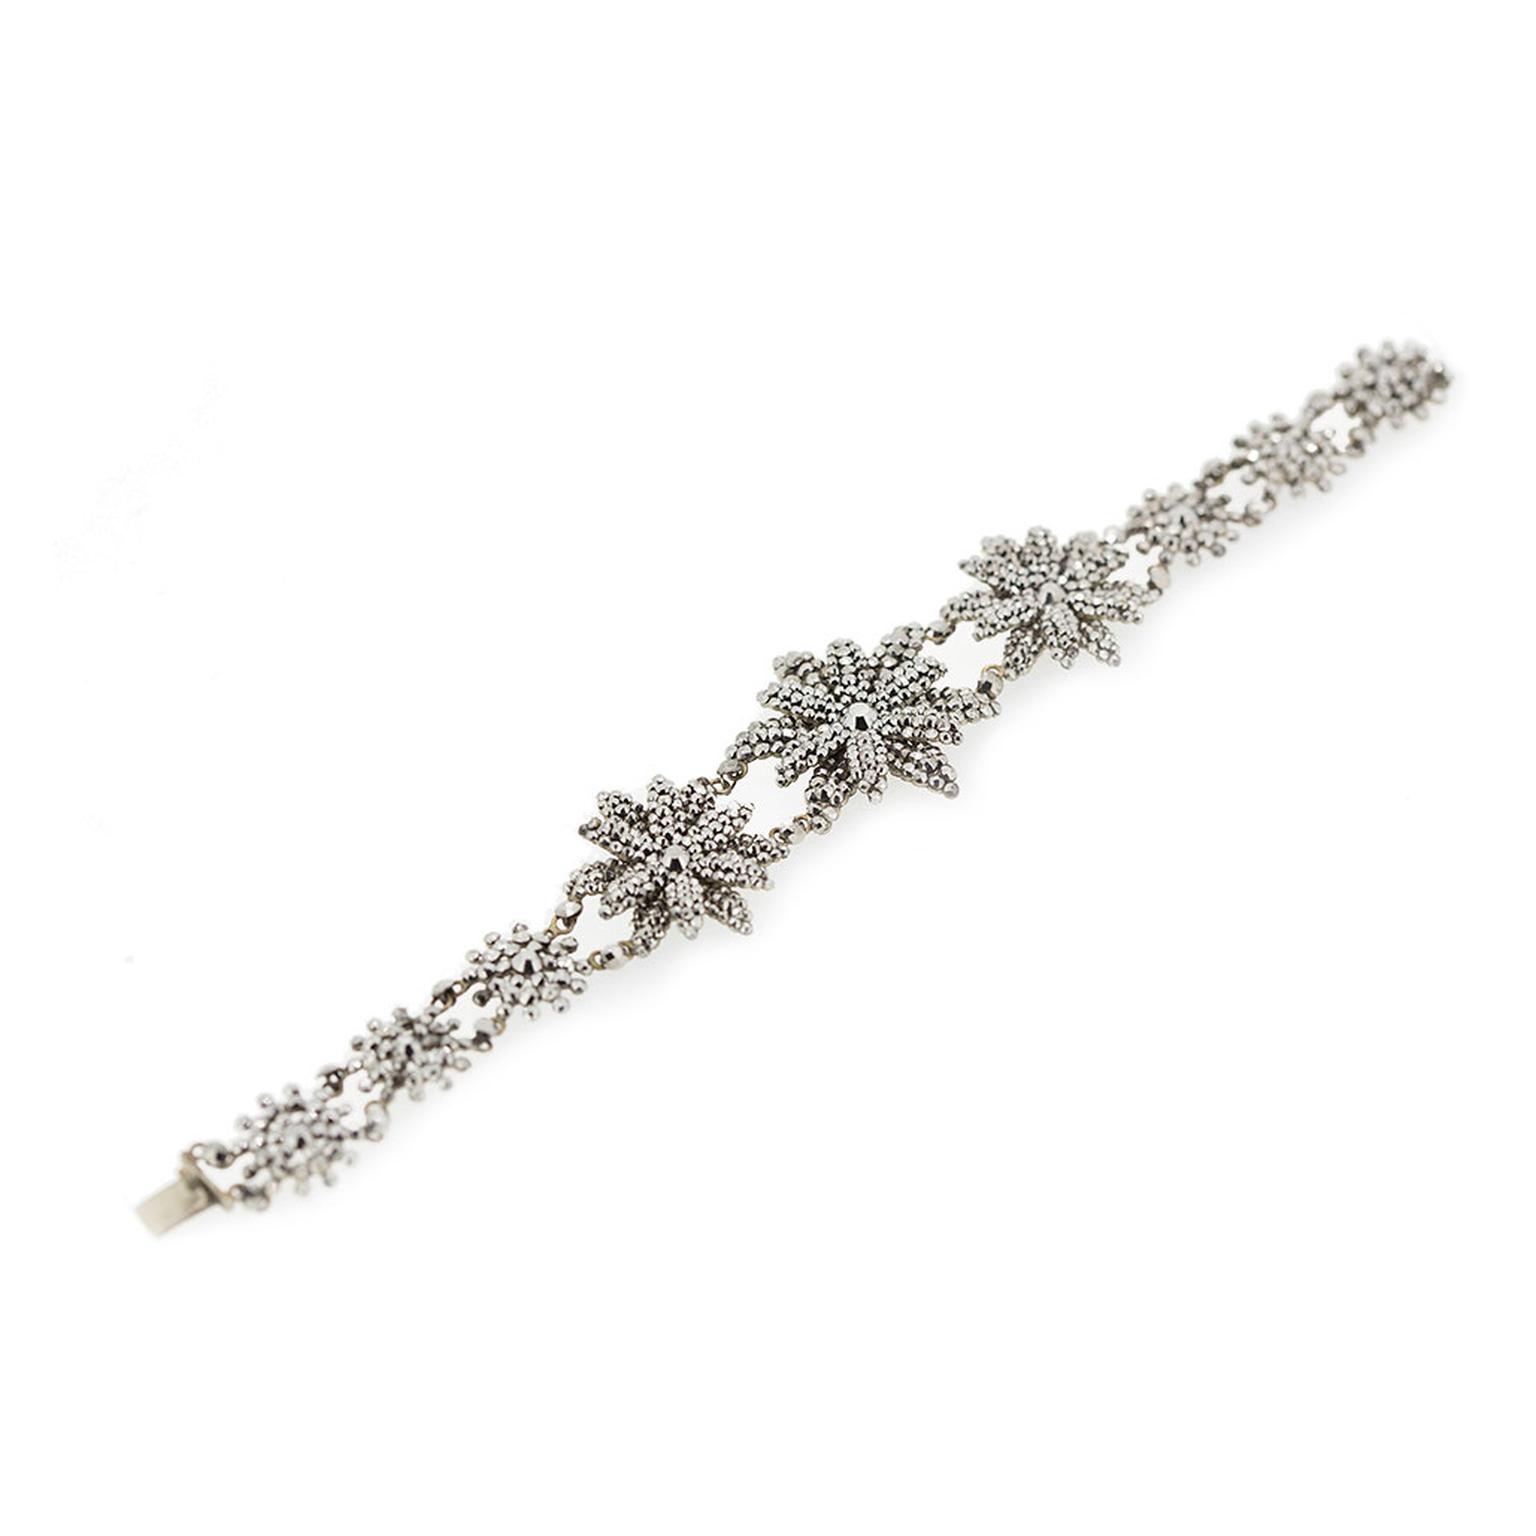 Lowther Antiques cut-steel flower bracelet